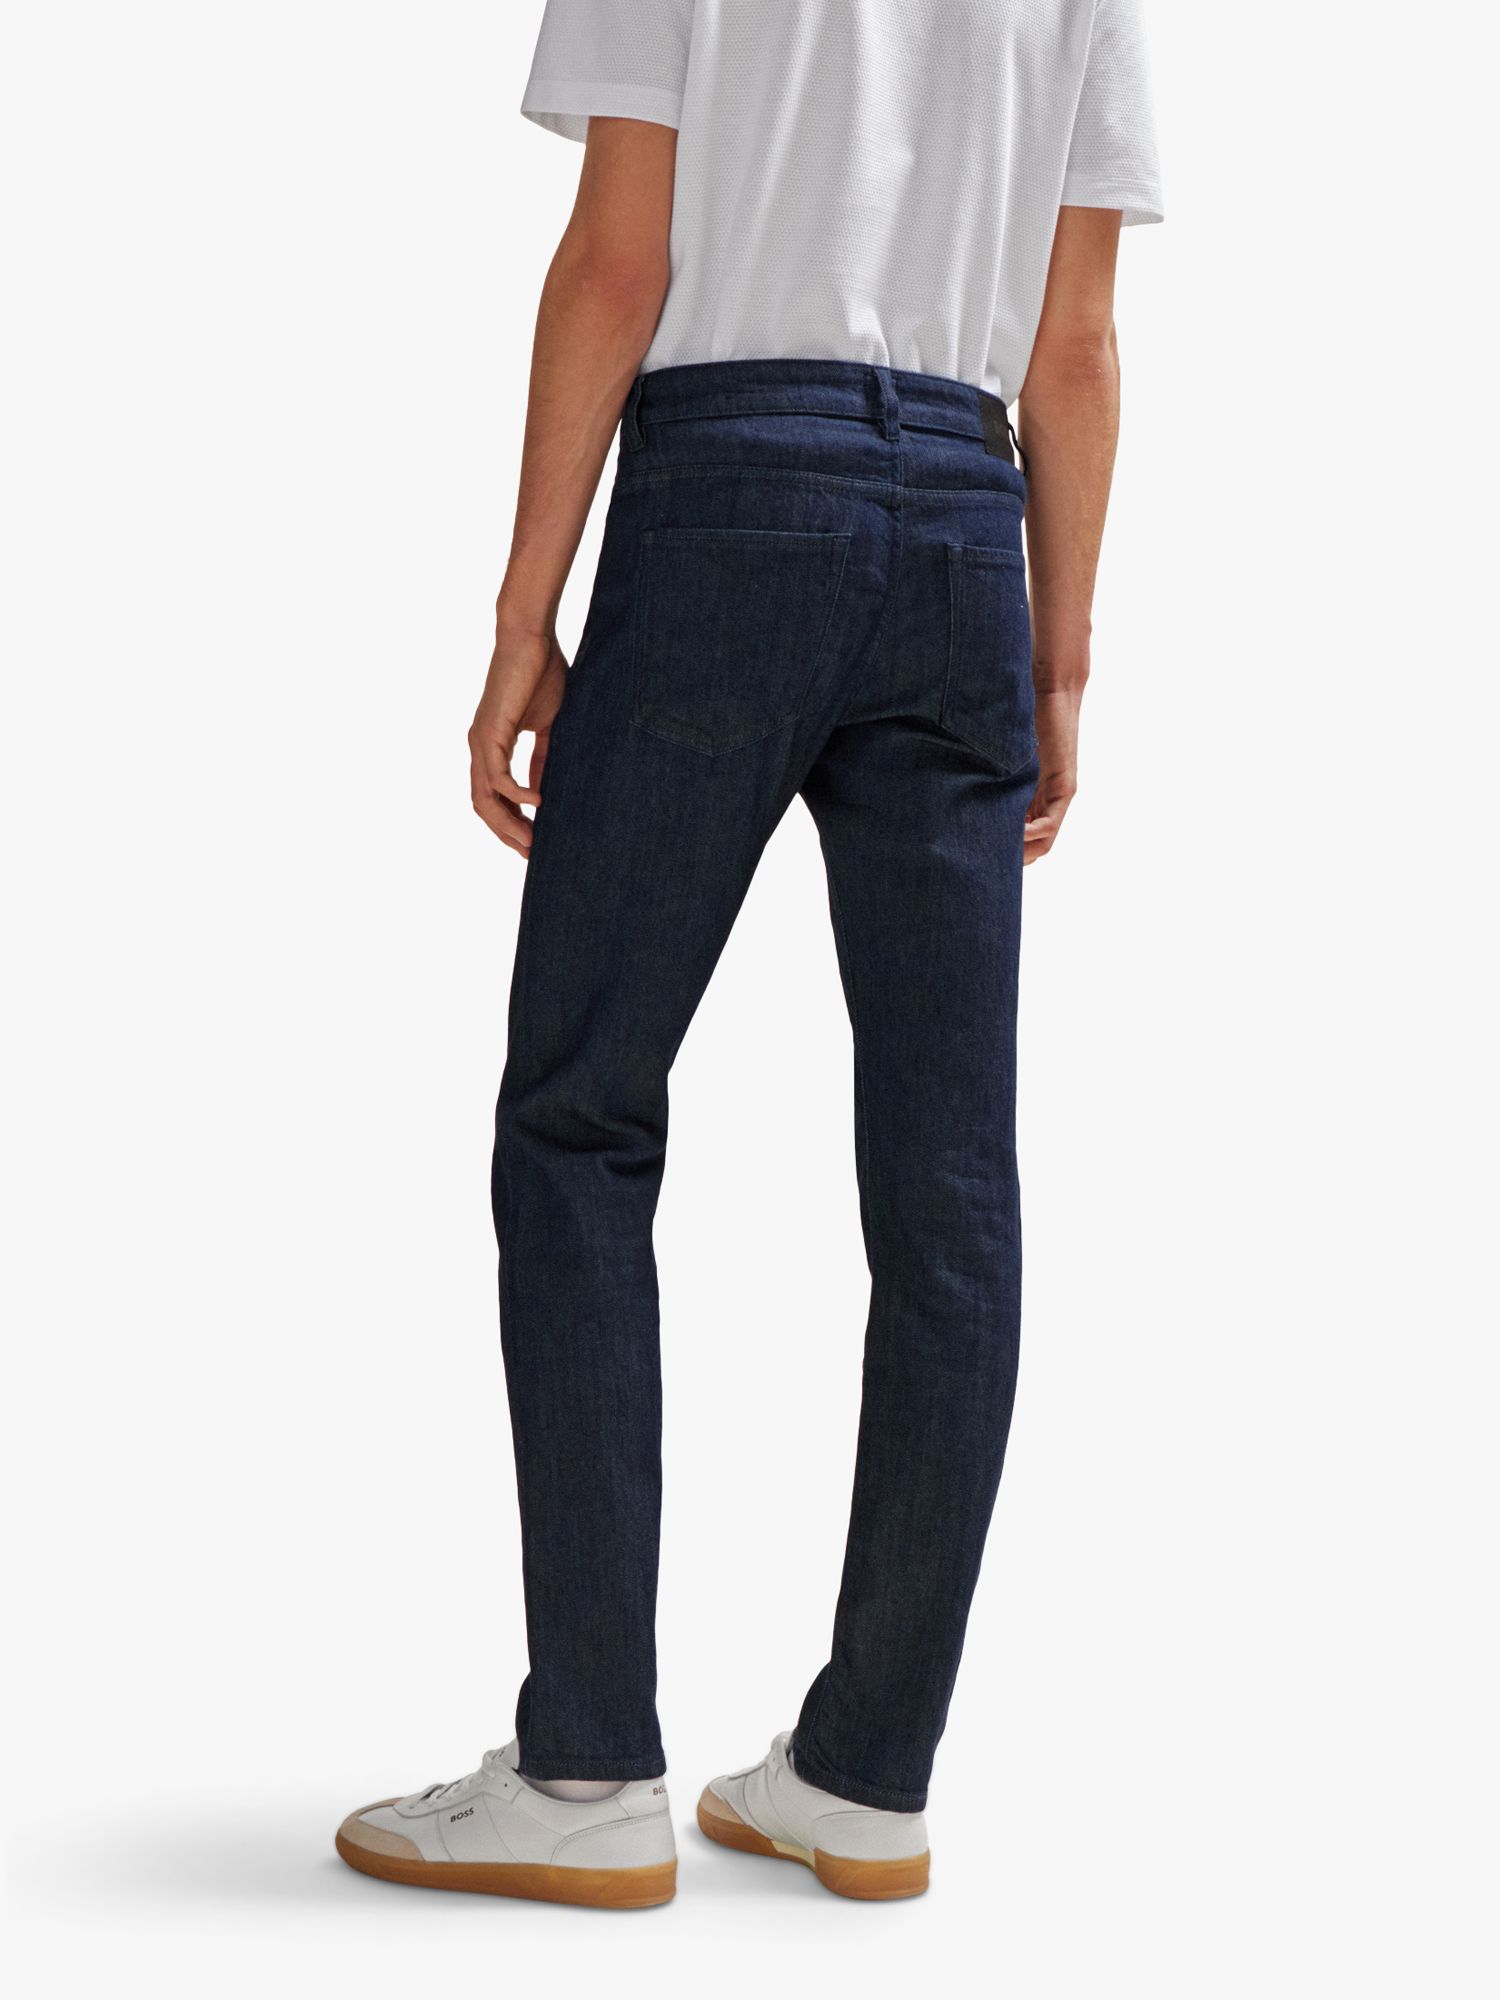 BOSS Delaware Slim Fit Jeans, Dark Blue, 34S